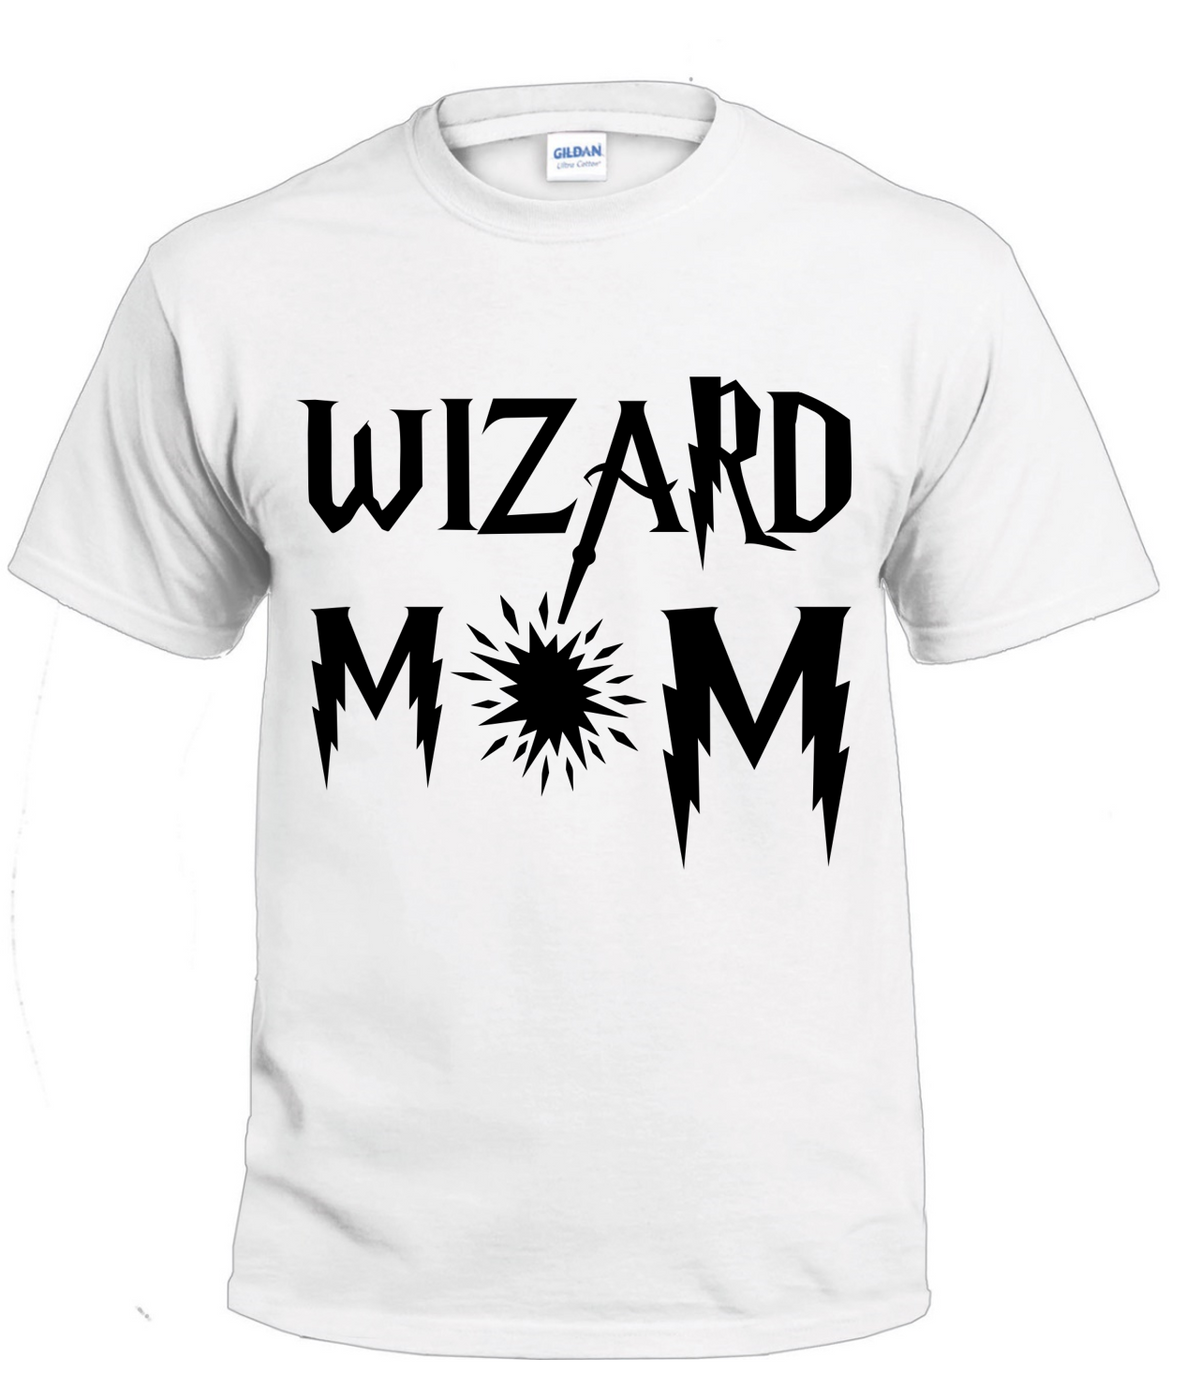 Wizard Mom t-shirt